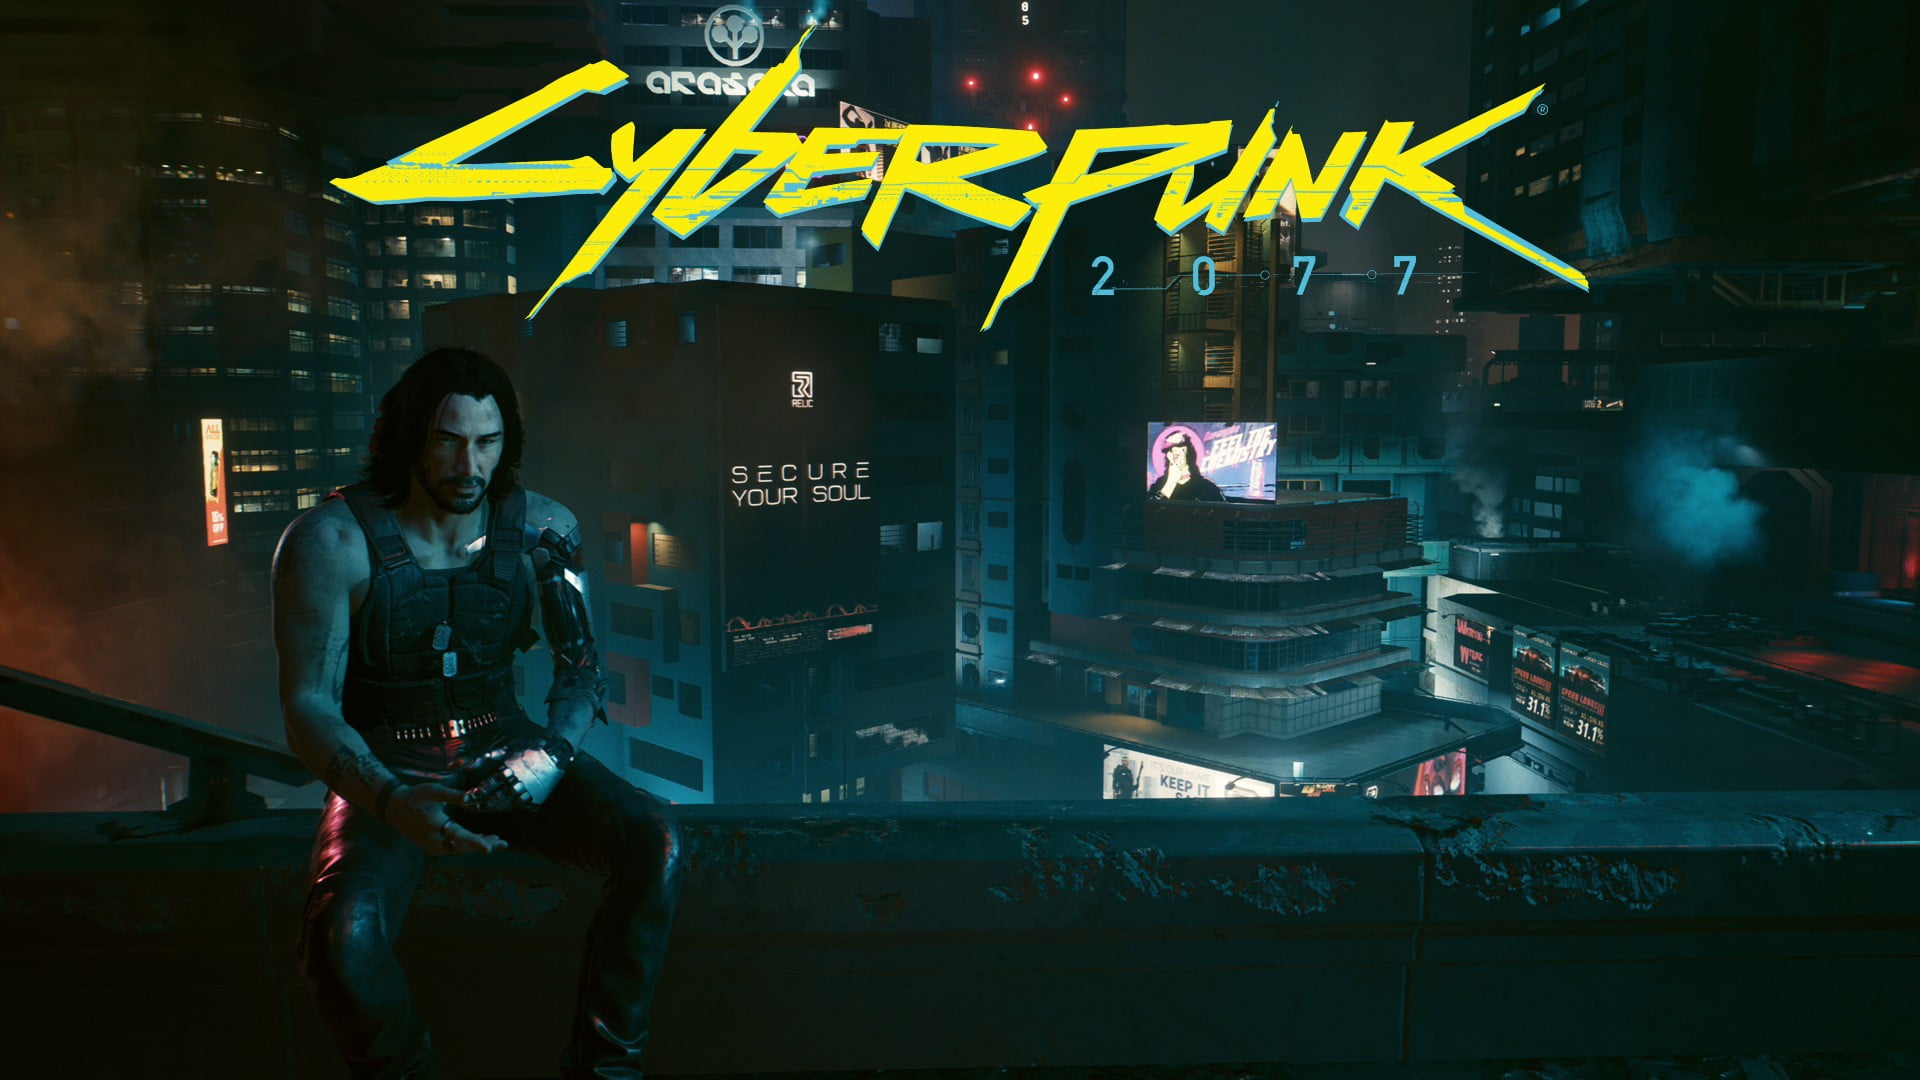 This is my desktop wallpaper now. : r/Cyberpunk